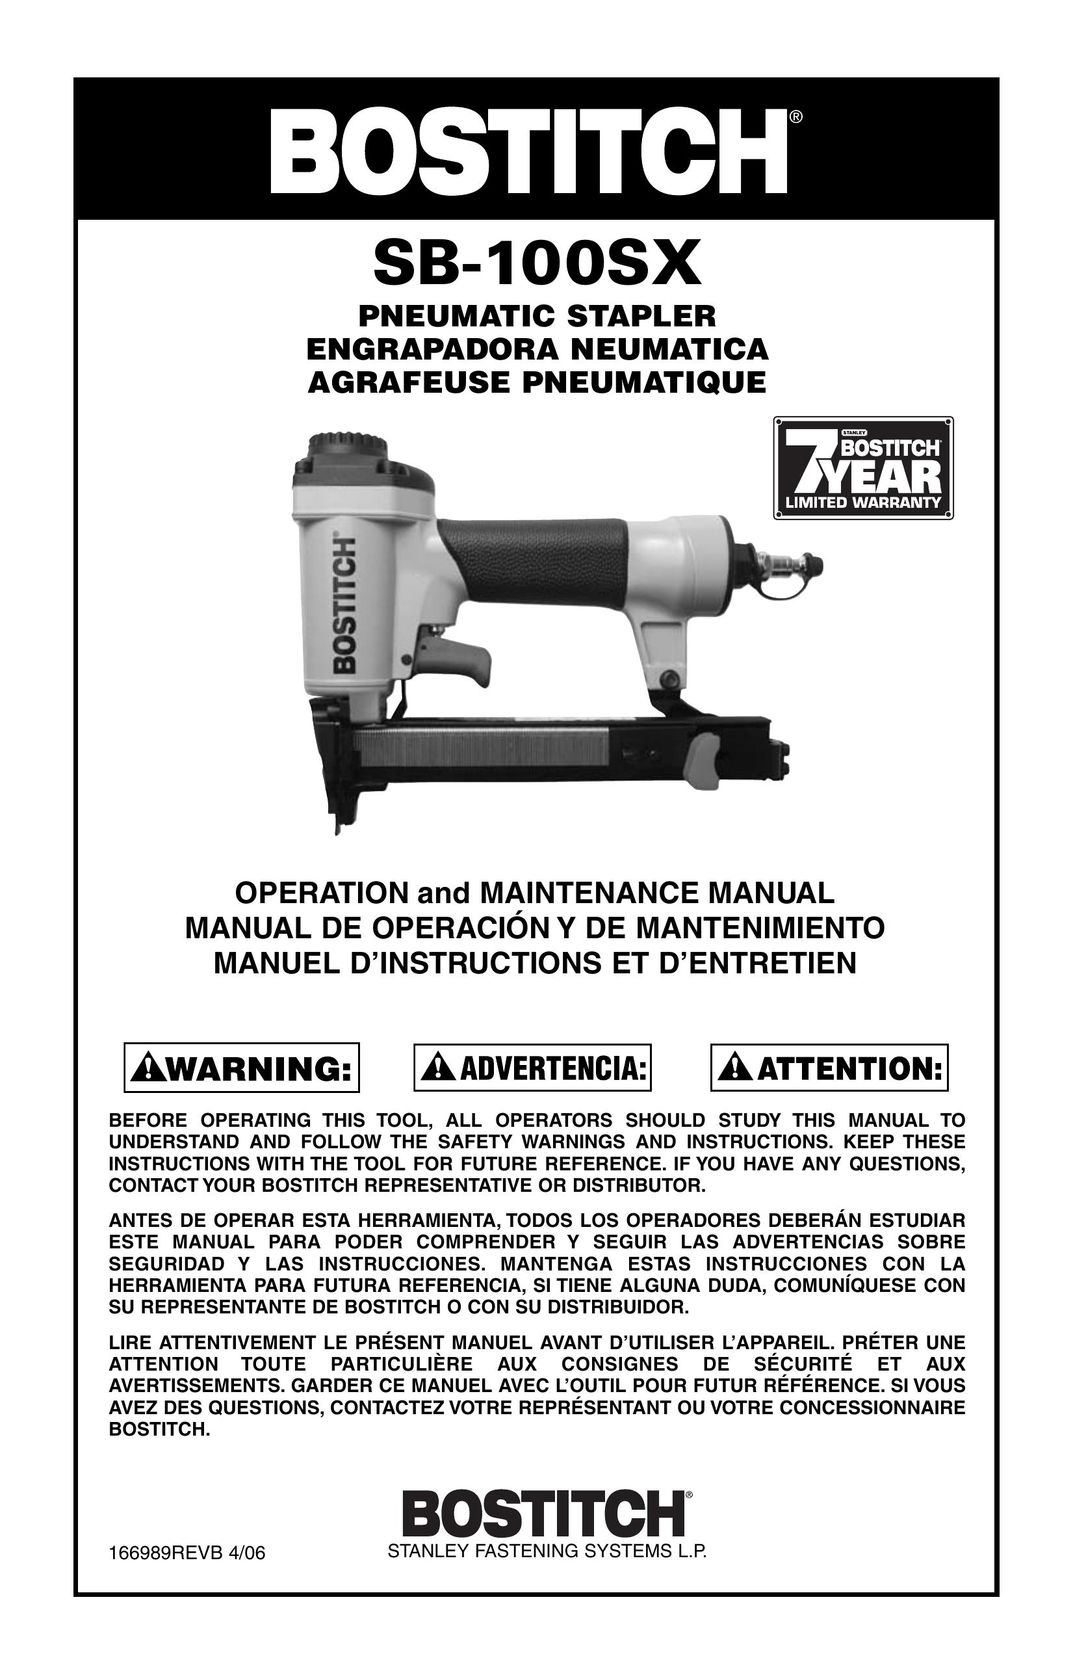 Bostitch SB-100SX Staple Gun User Manual